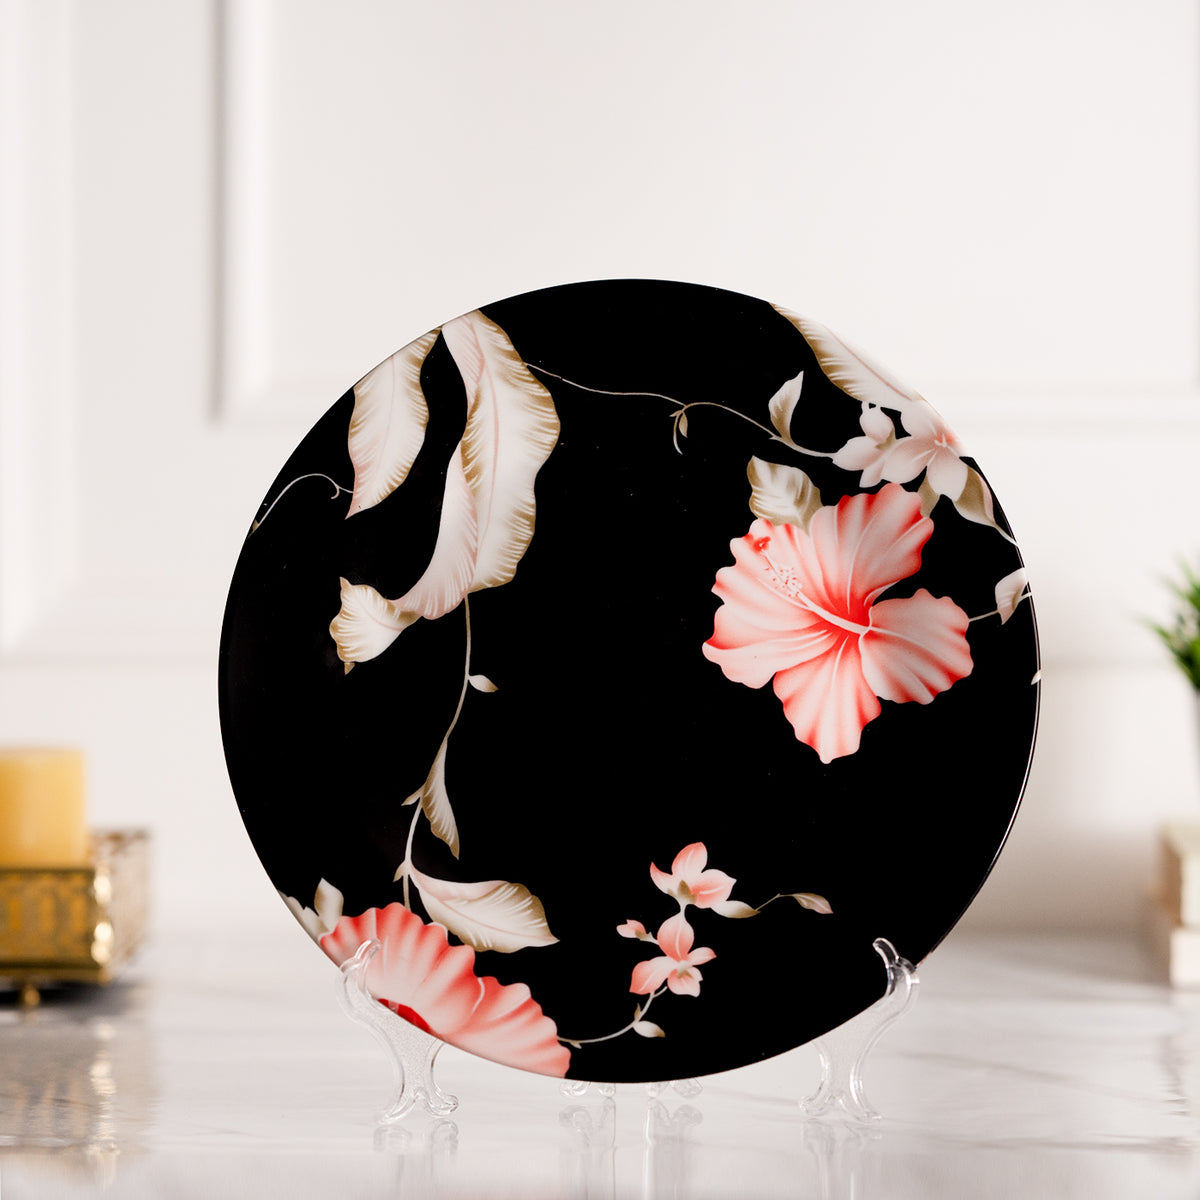 Renaissance Floral Ceramic wall plates decor hanging / tabletop